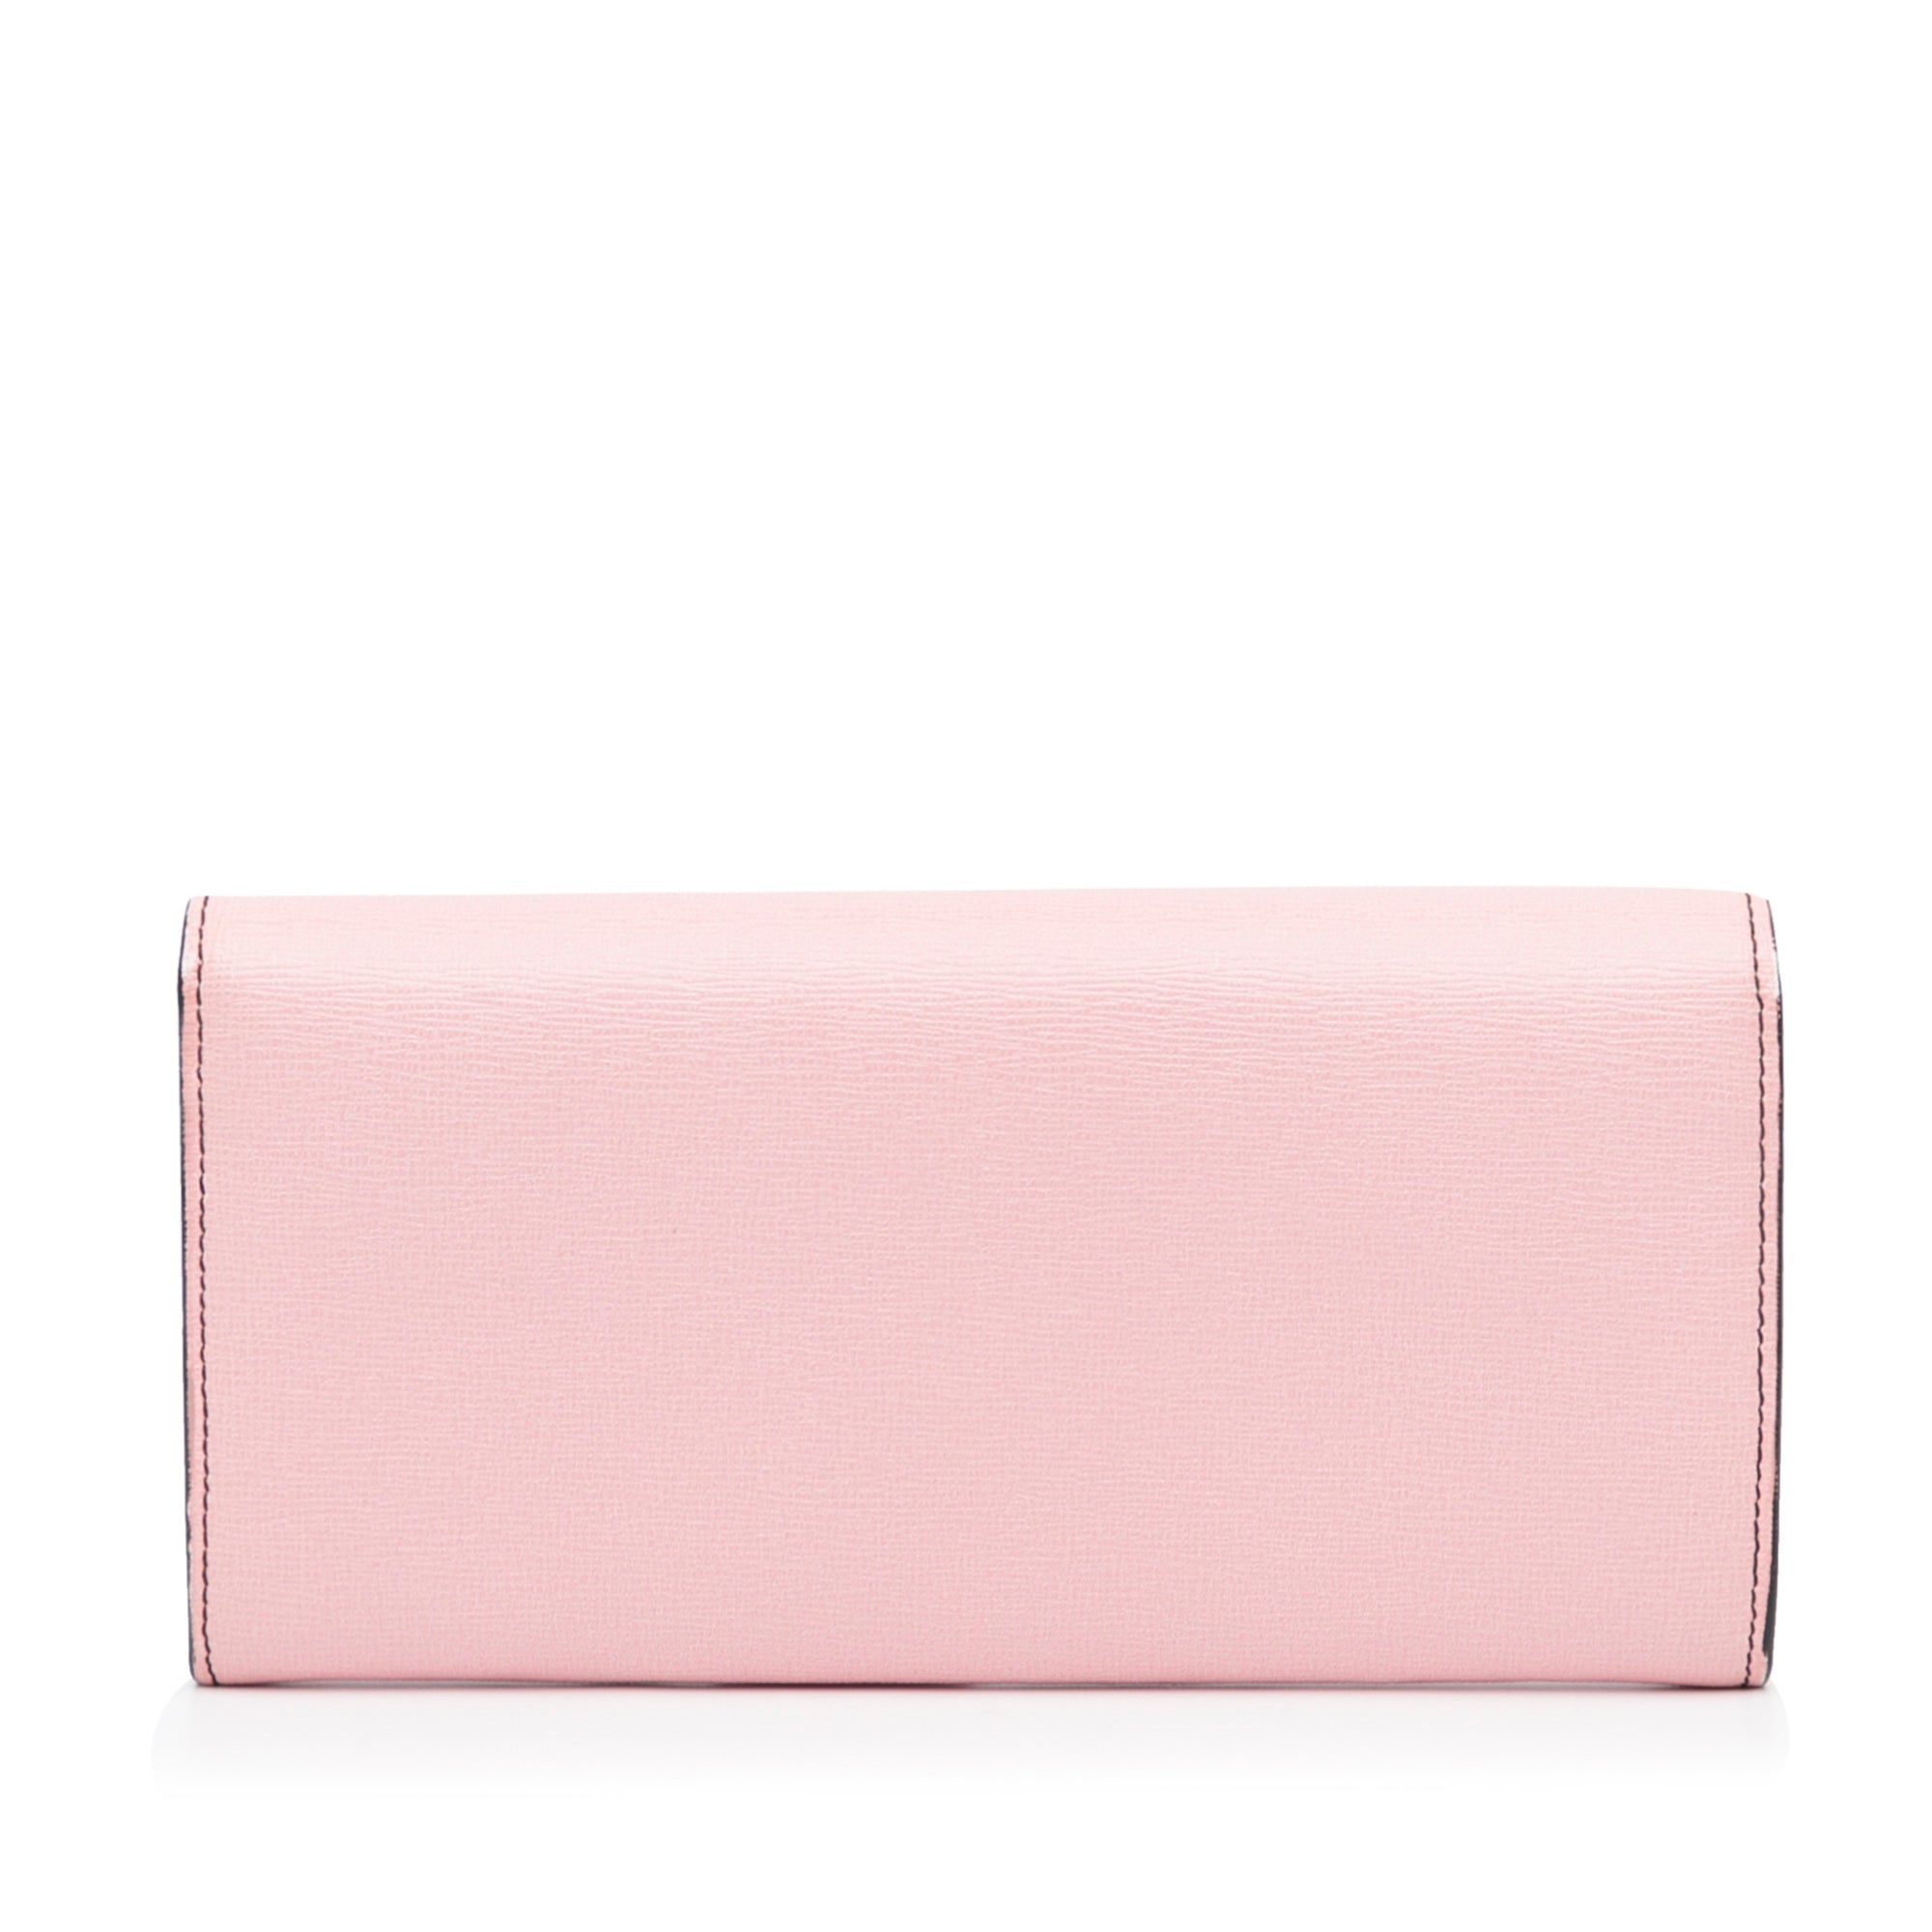 Fendi Pink Fendi Continental Long Wallet Leather Pony-style